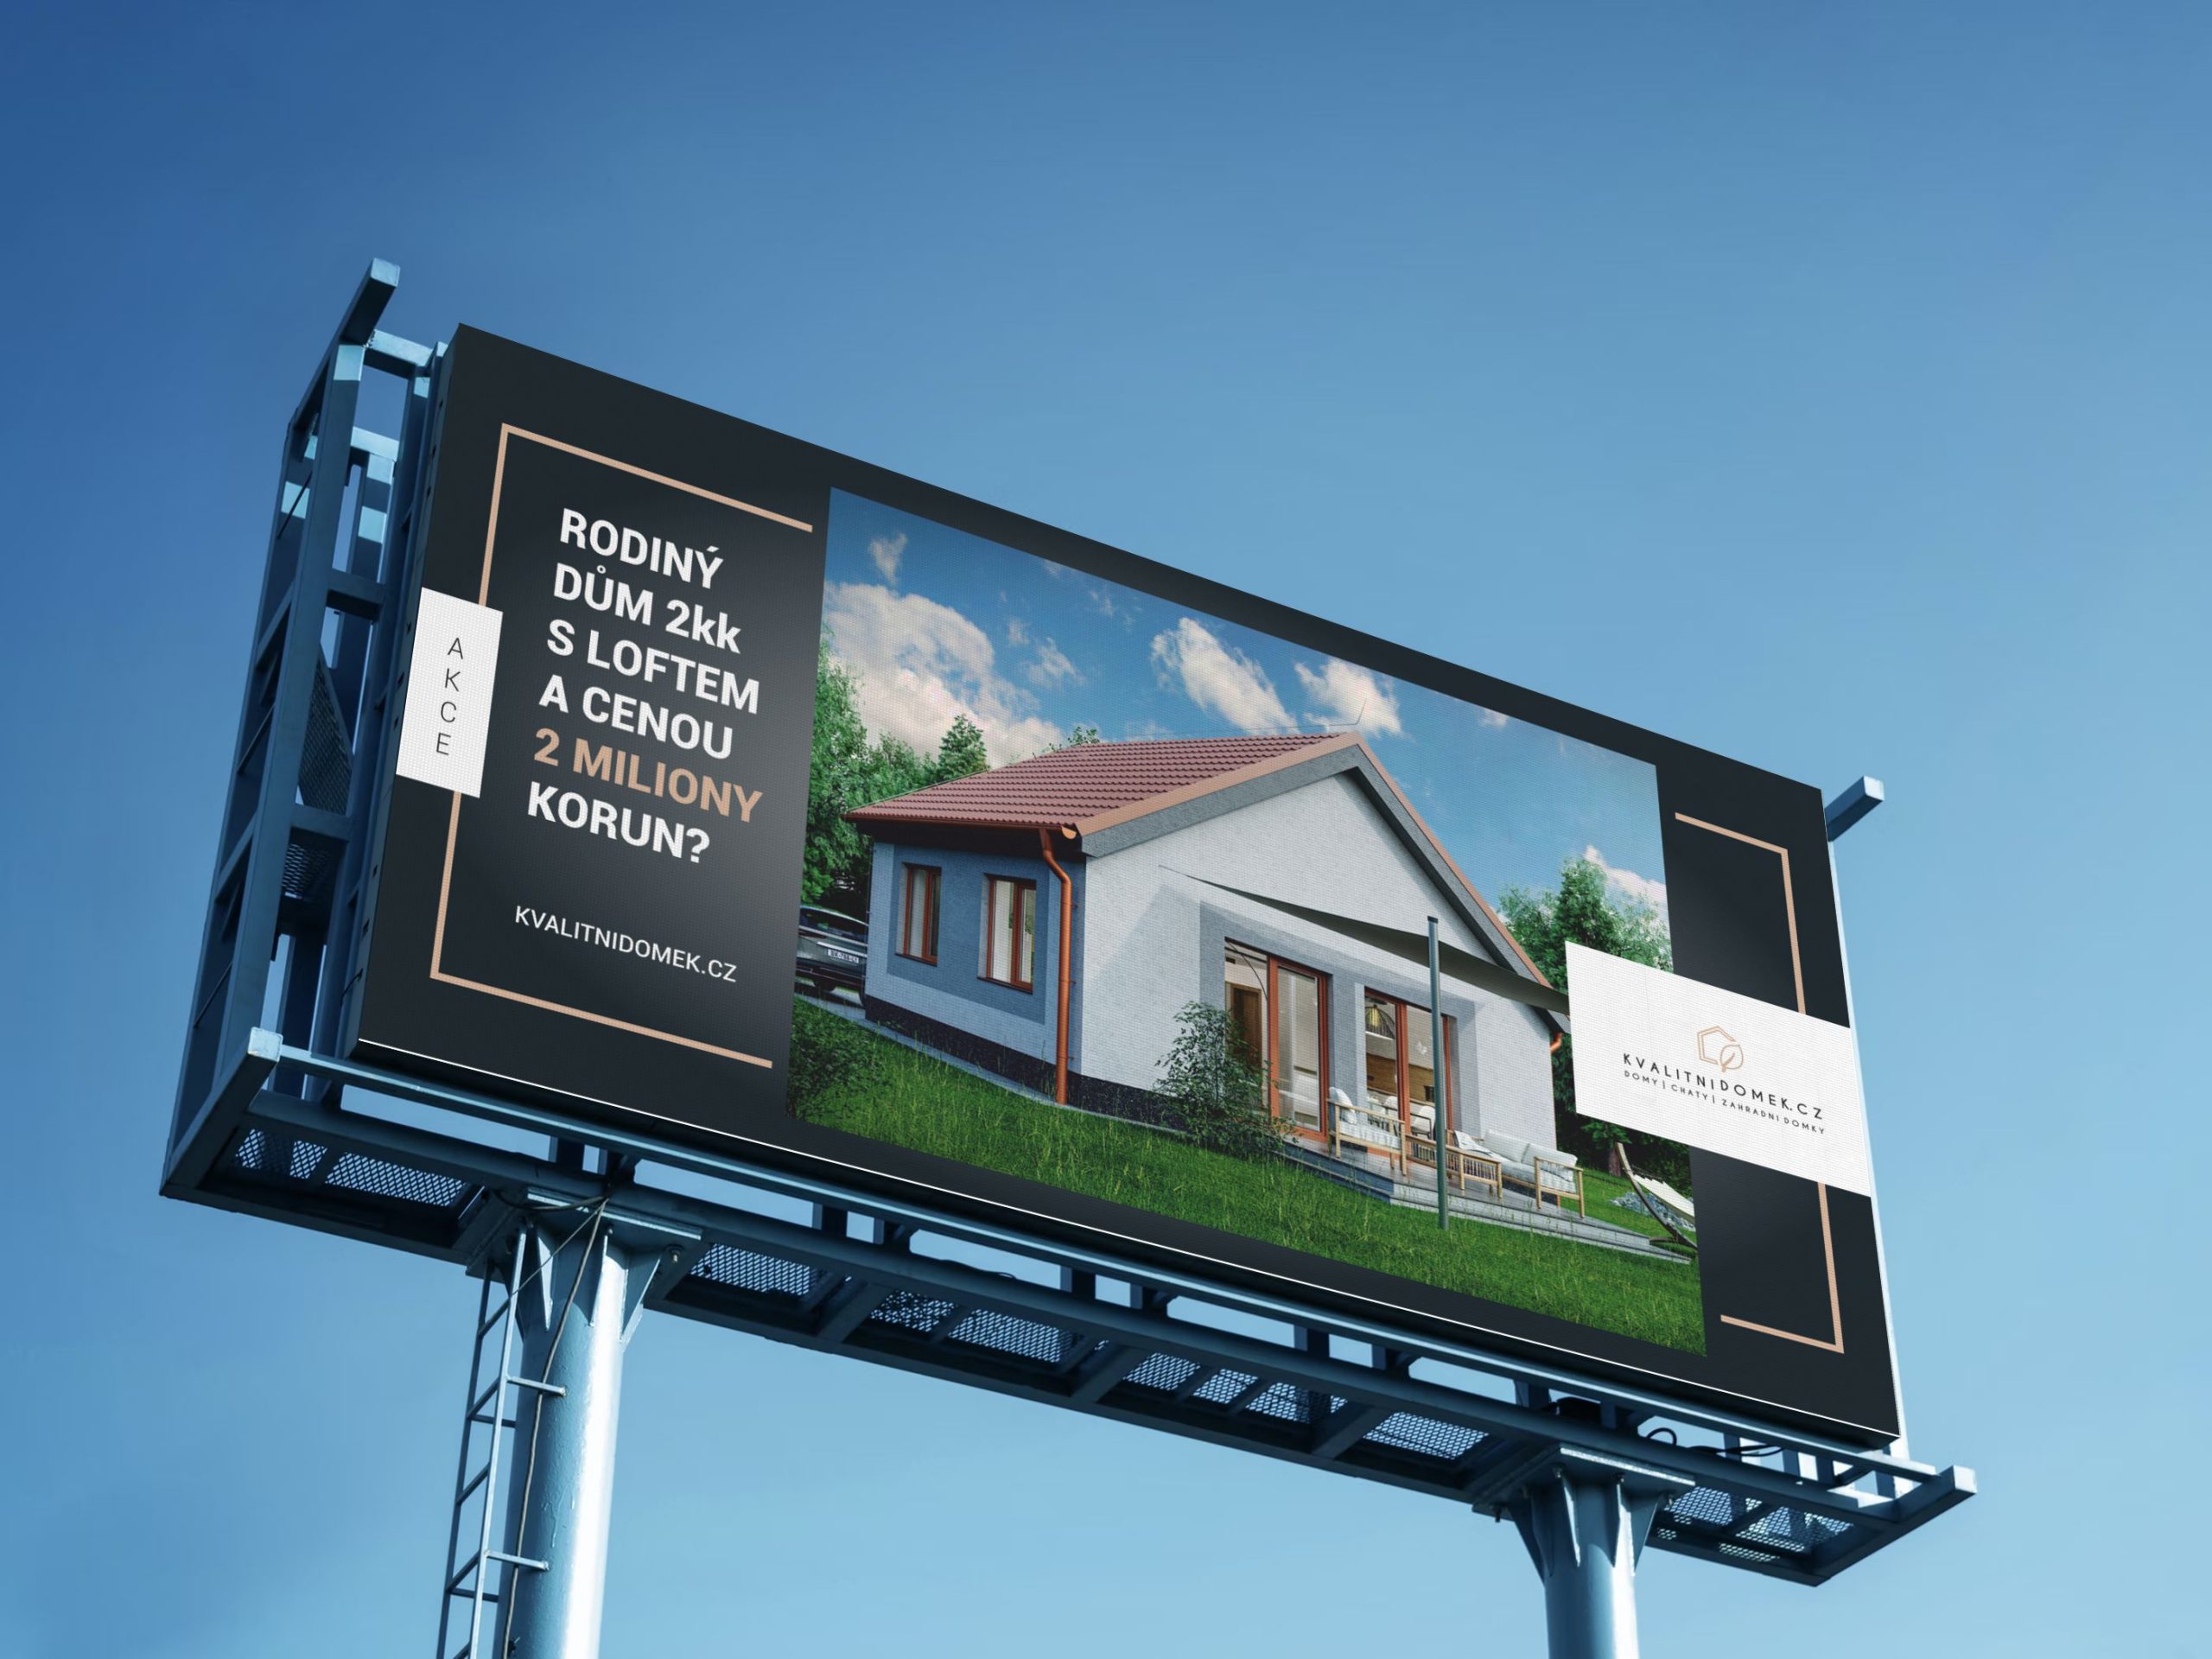 Kvalitni domek billboard scaled